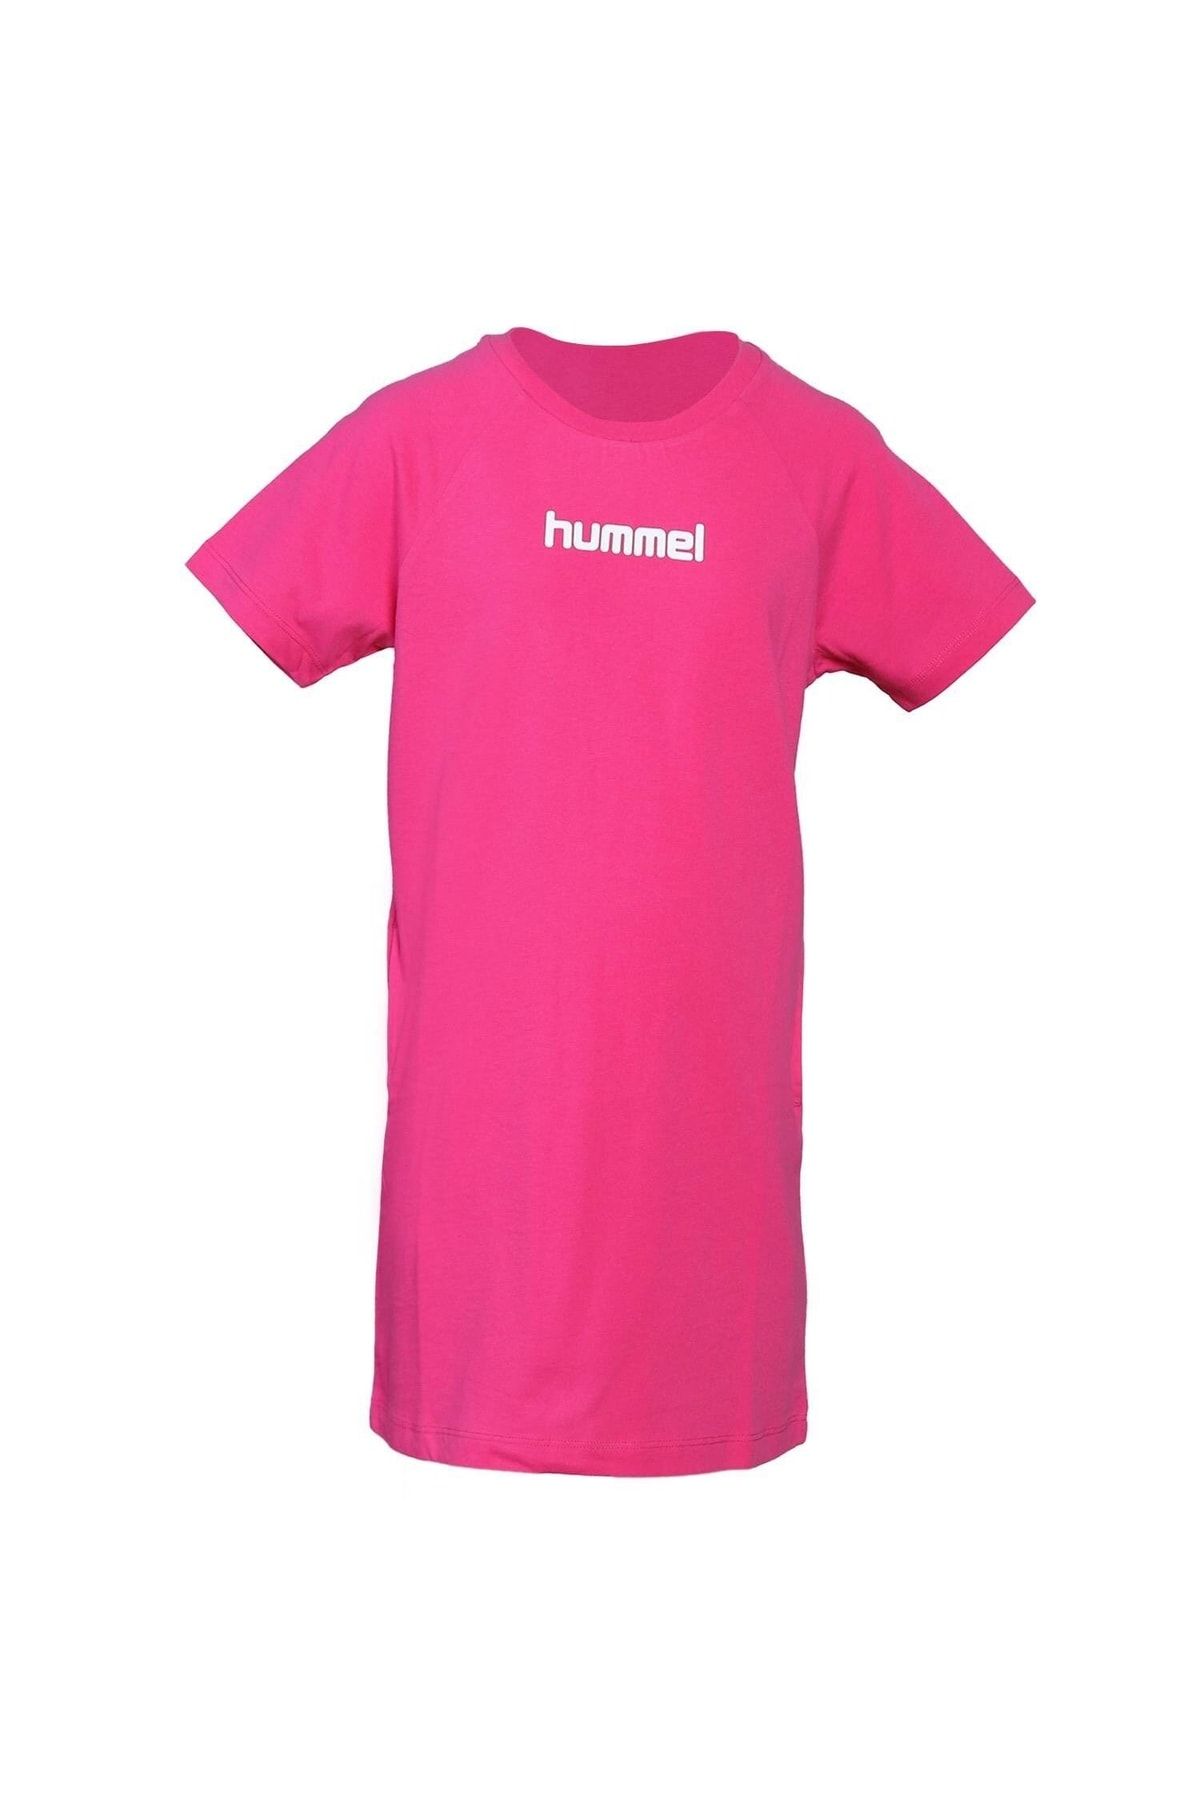 hummel تی شرت لباس مونترسو بچه های یونیسکس